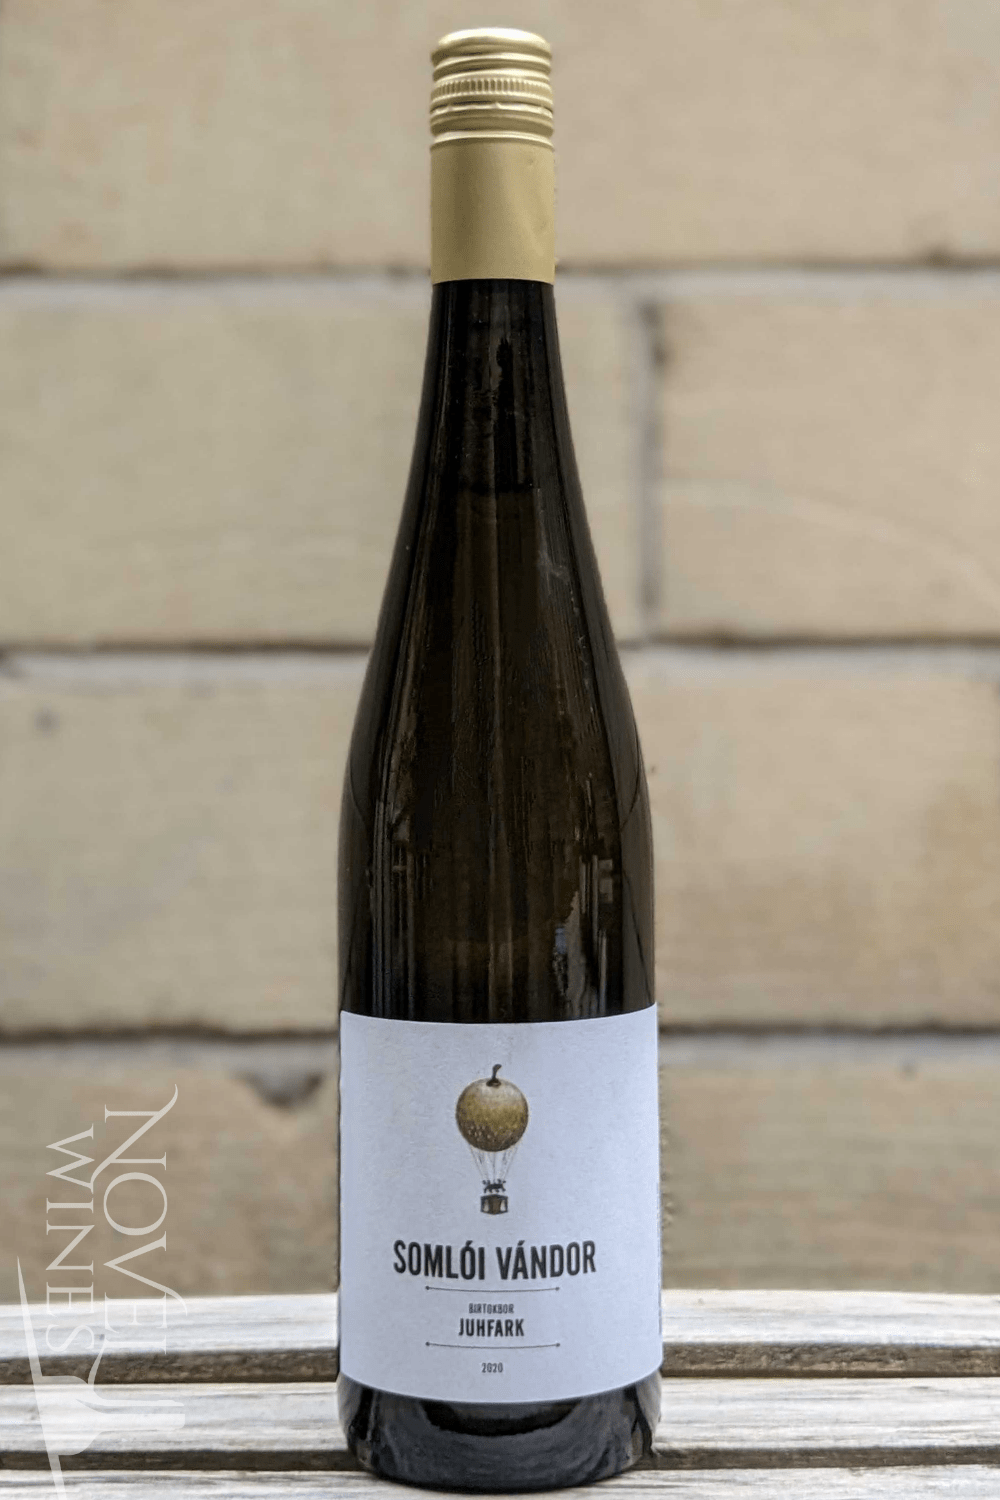 Somloi Vandor White Wine Somloi Vandor Juhfark Teraszok Single Vineyard 2020, Hungary